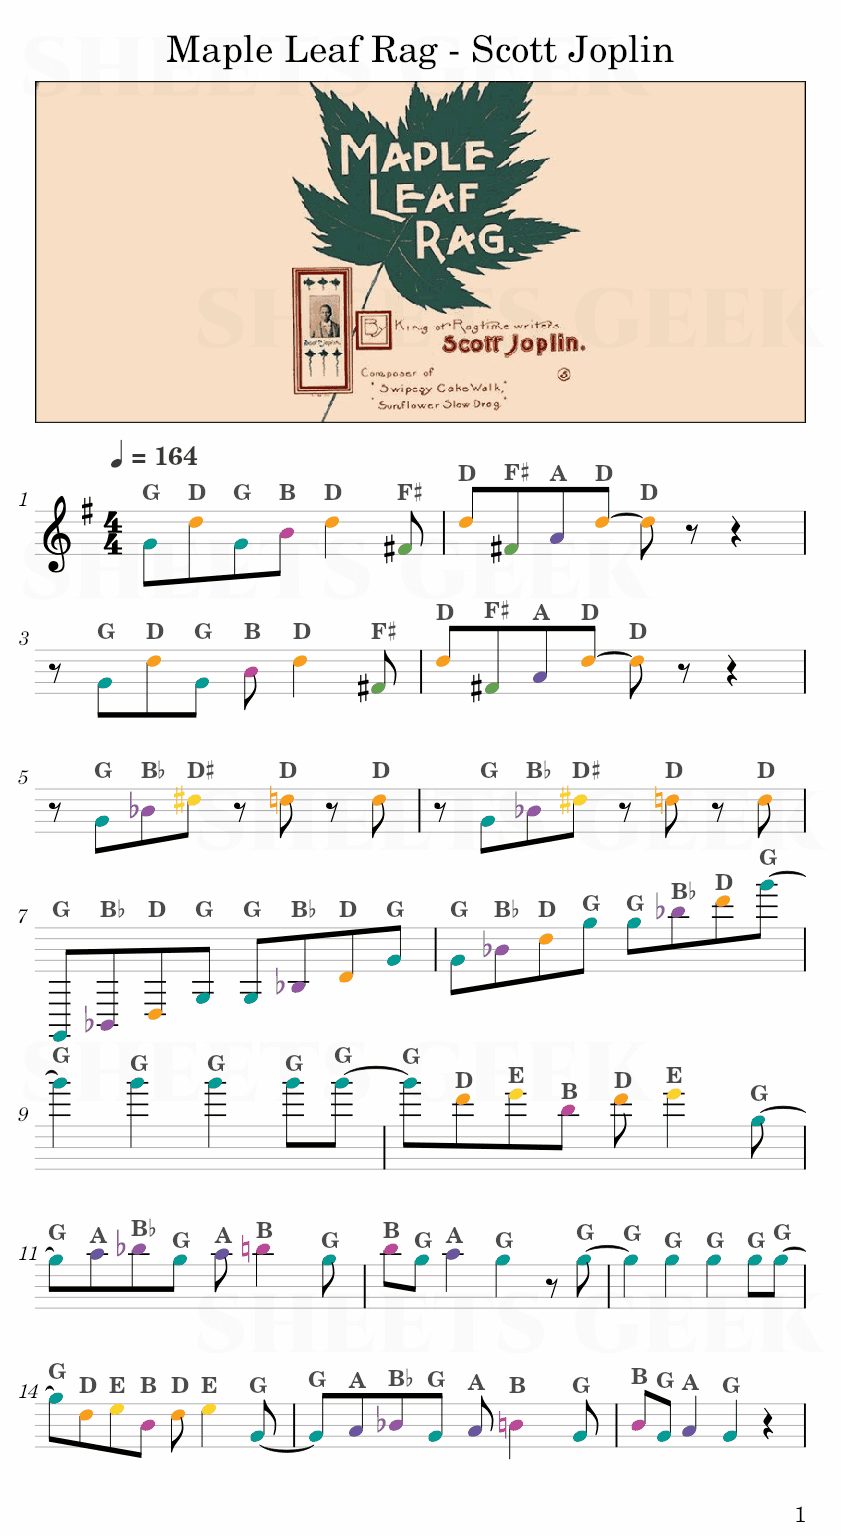 Maple Leaf Rag - Scott Joplin Easy Sheet Music Free for piano, keyboard, flute, violin, sax, cello page 1